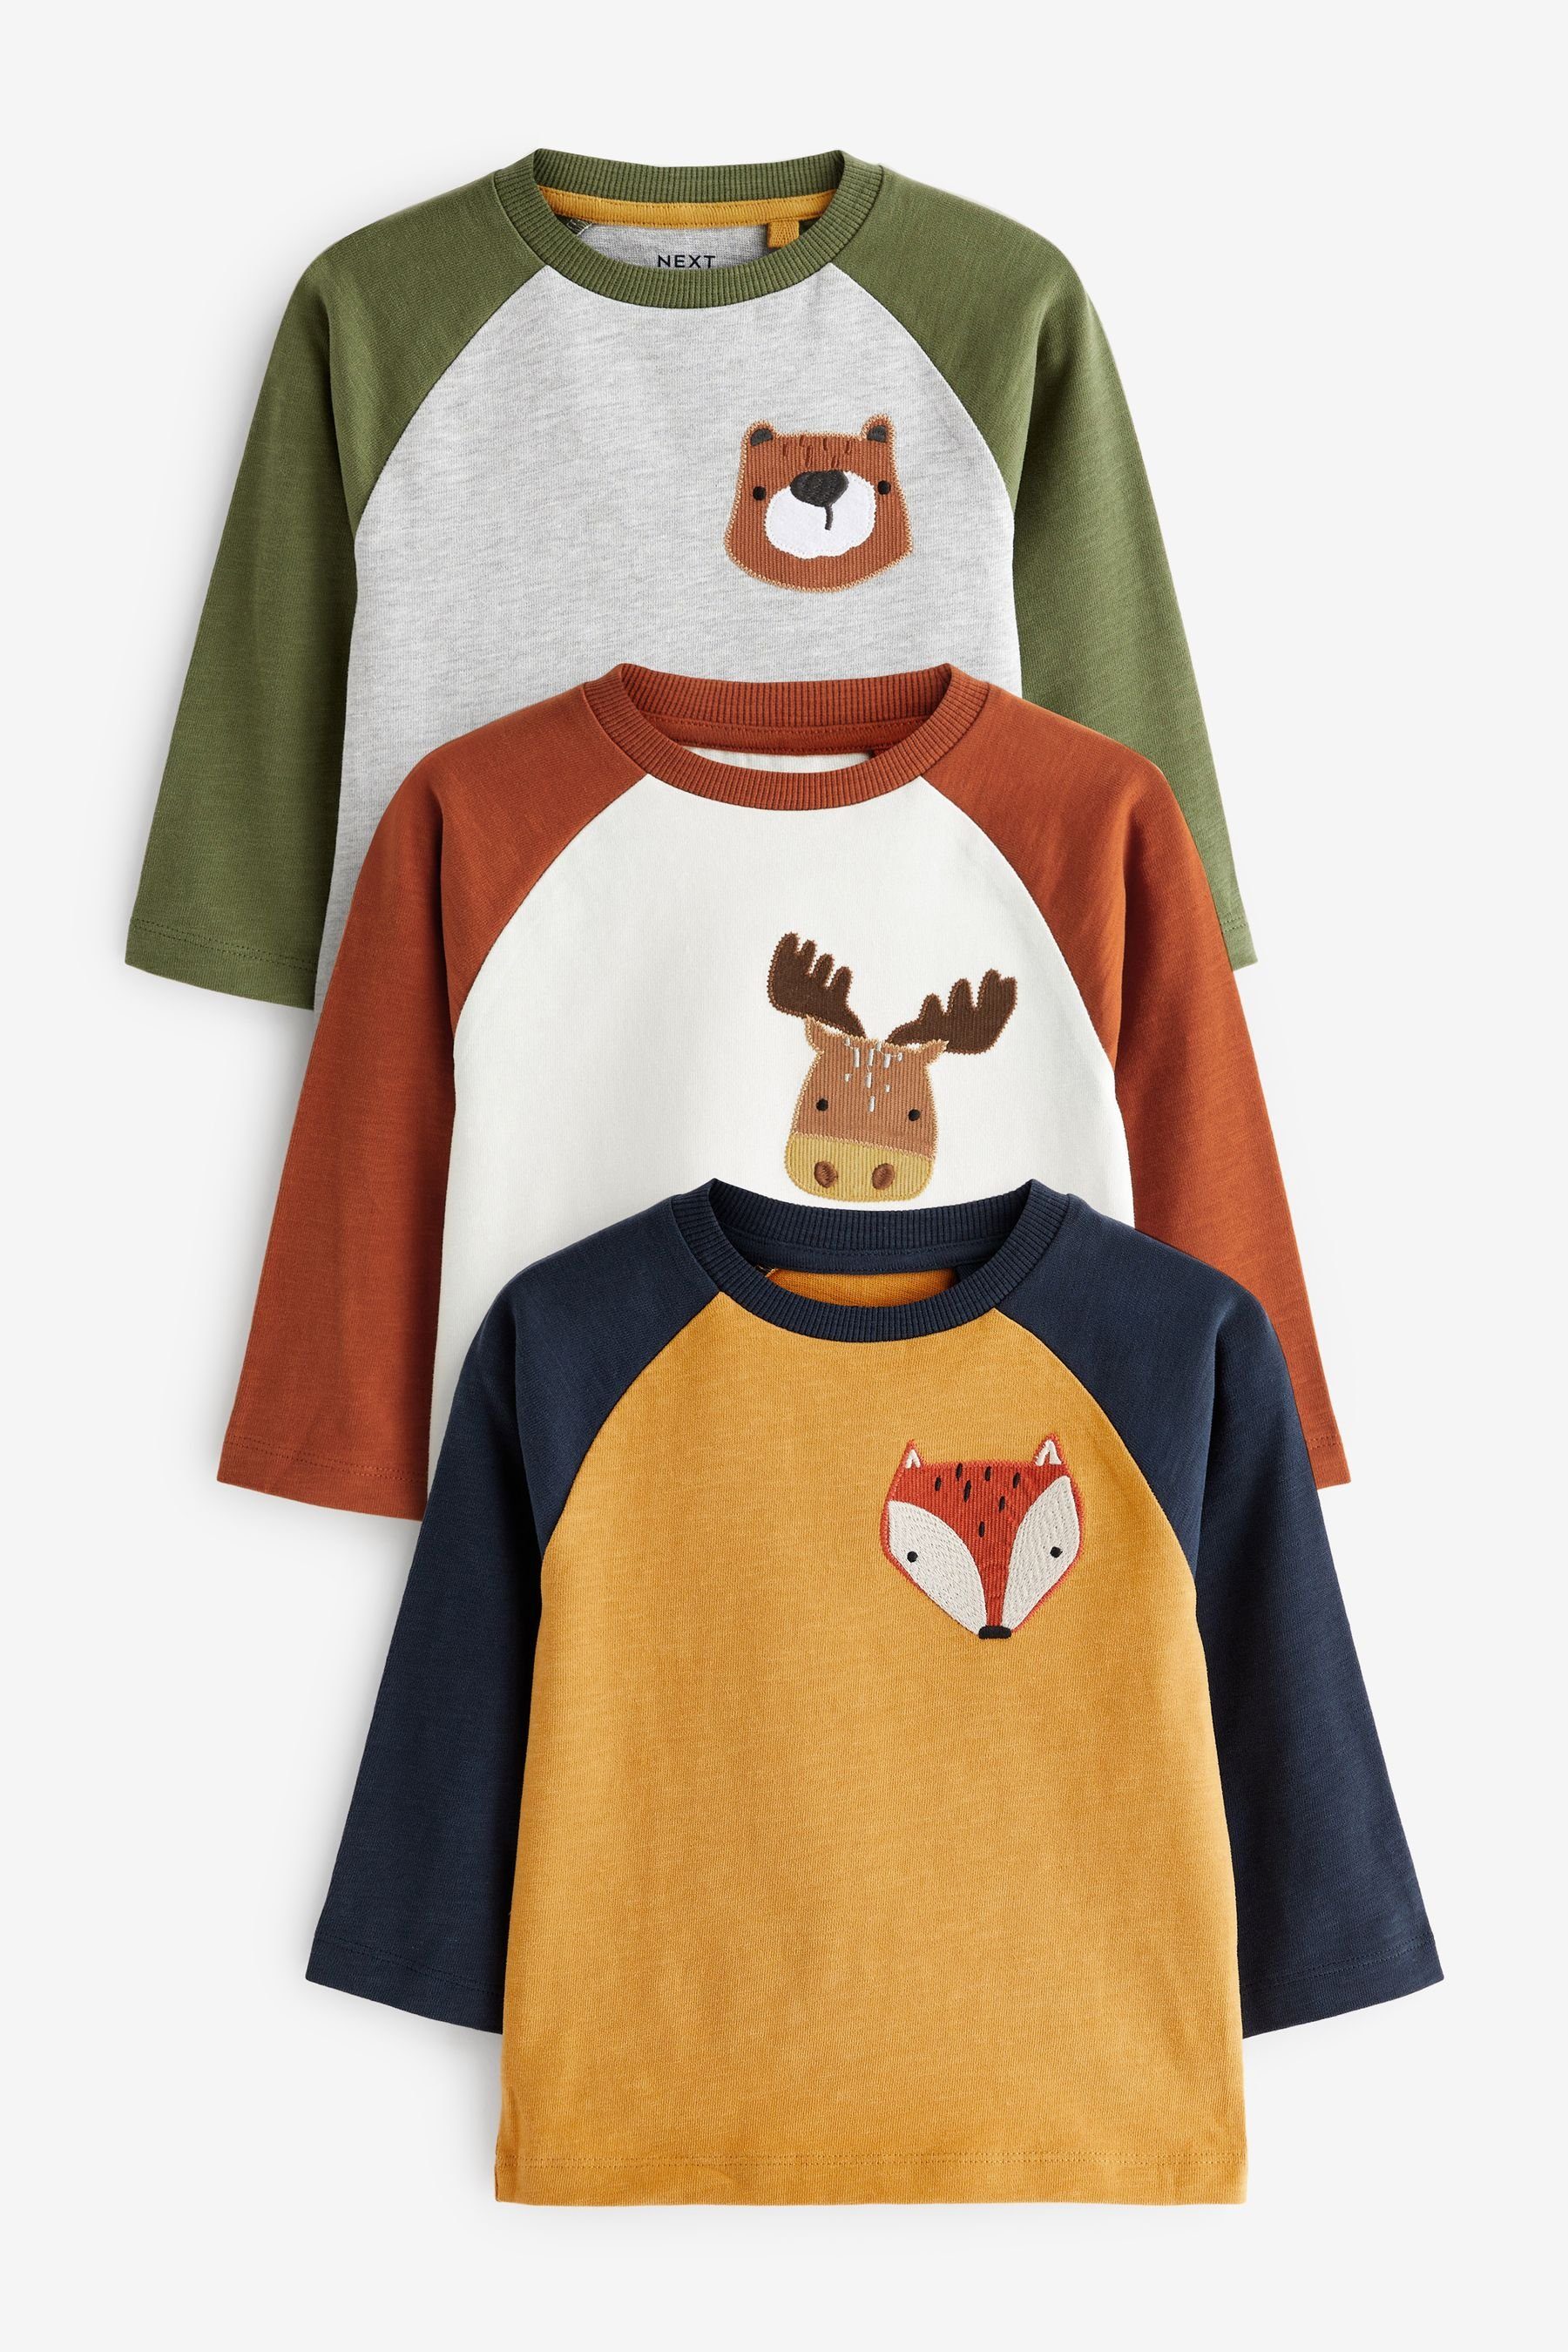 Next Langarmshirt Langärmelige Shirts mit Figurenmotiv im 3er-Pack (3-tlg) Multi Colour Animal